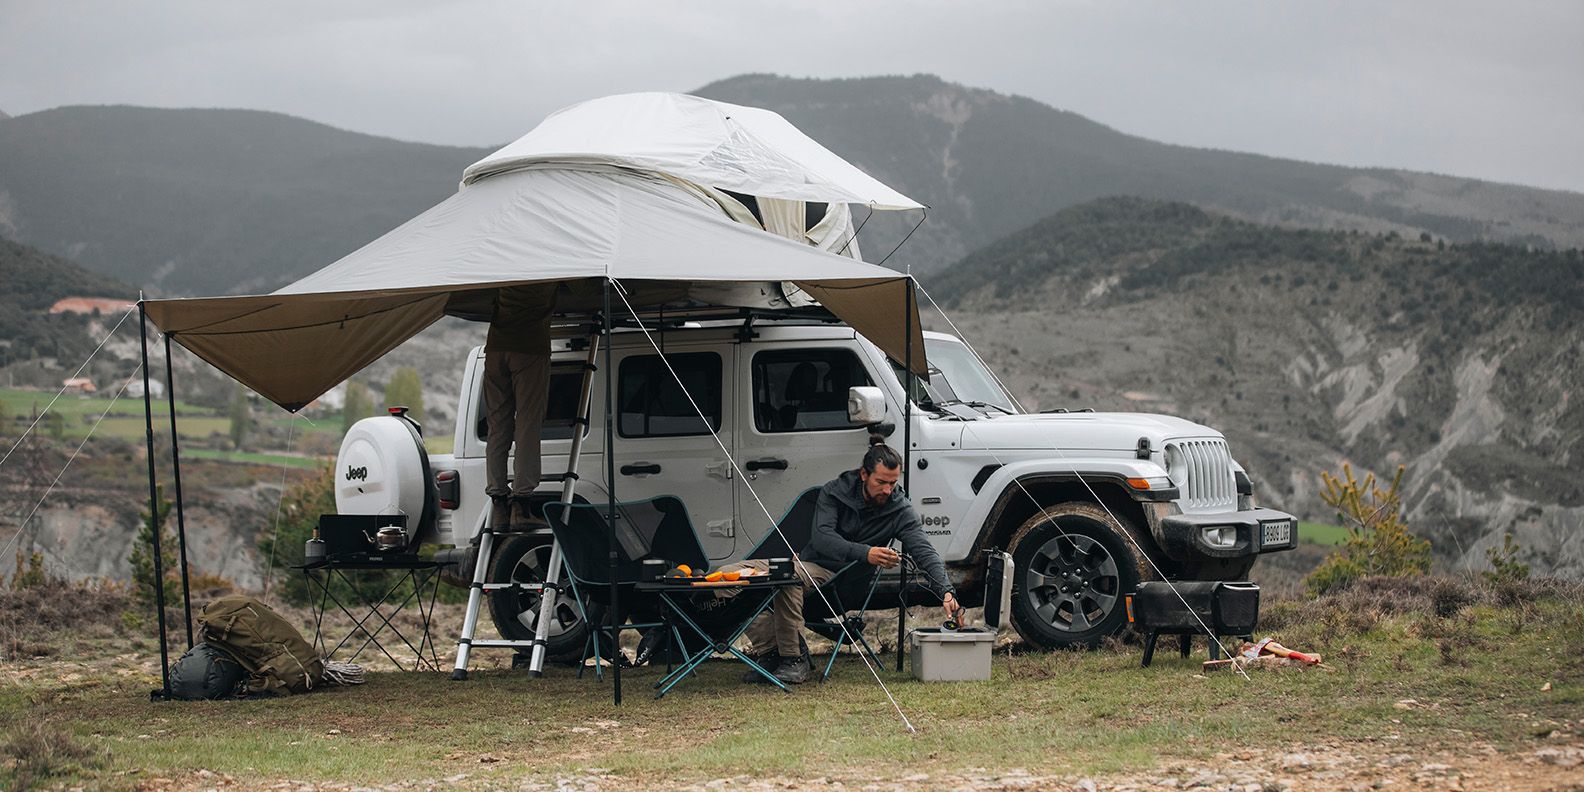 В горах припаркован джип с палаткой для крыши Thule Approch, под маркизой палатки сидит мужчина